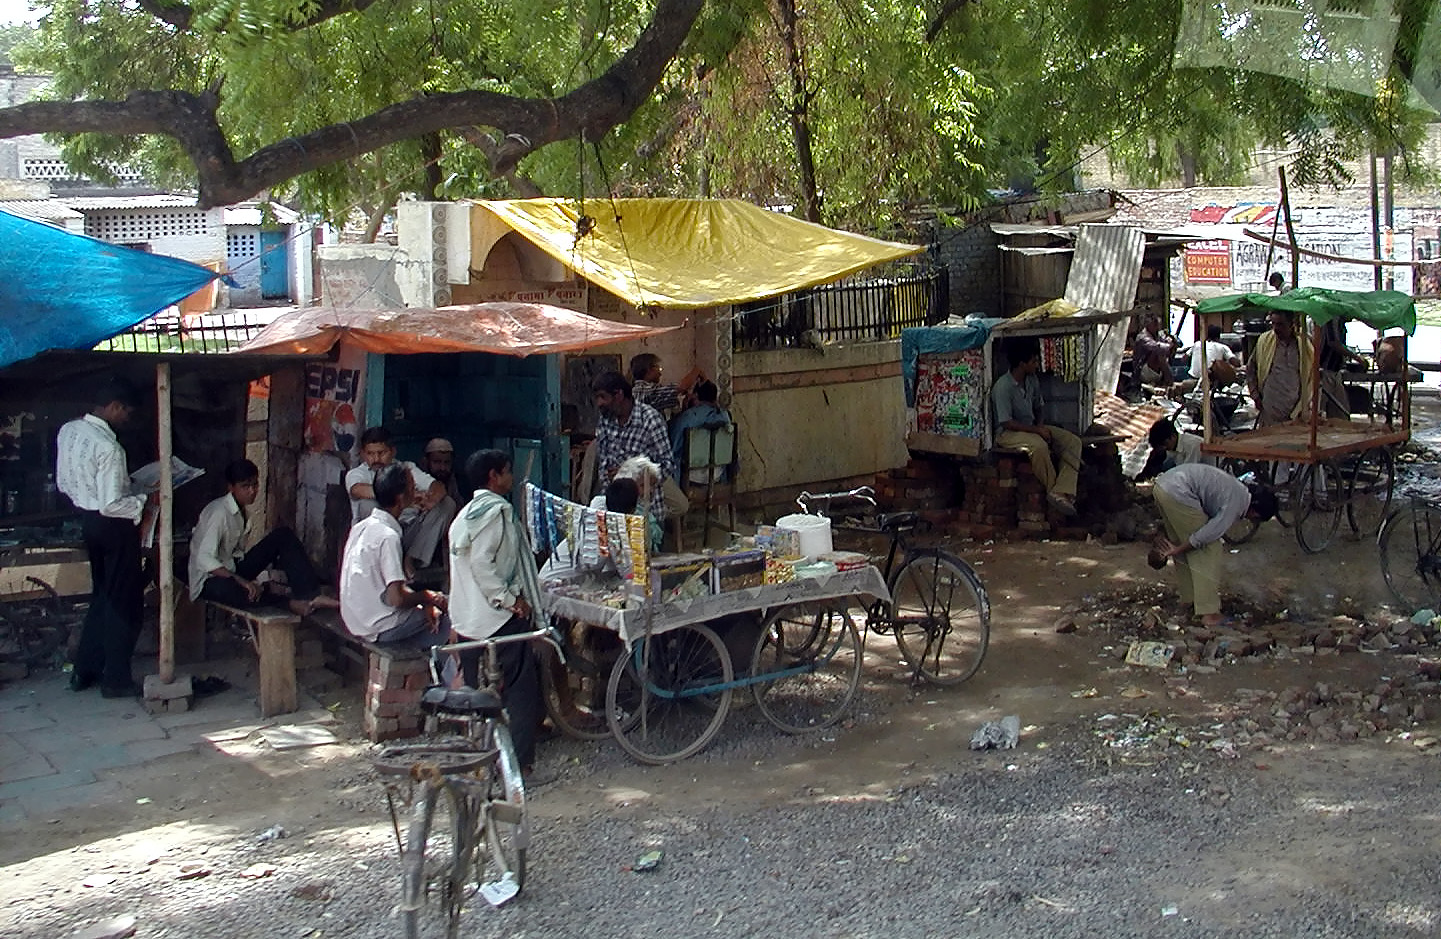 10-Jun-2001 11:15 - Agra - Street scene on the outskirts of Agra